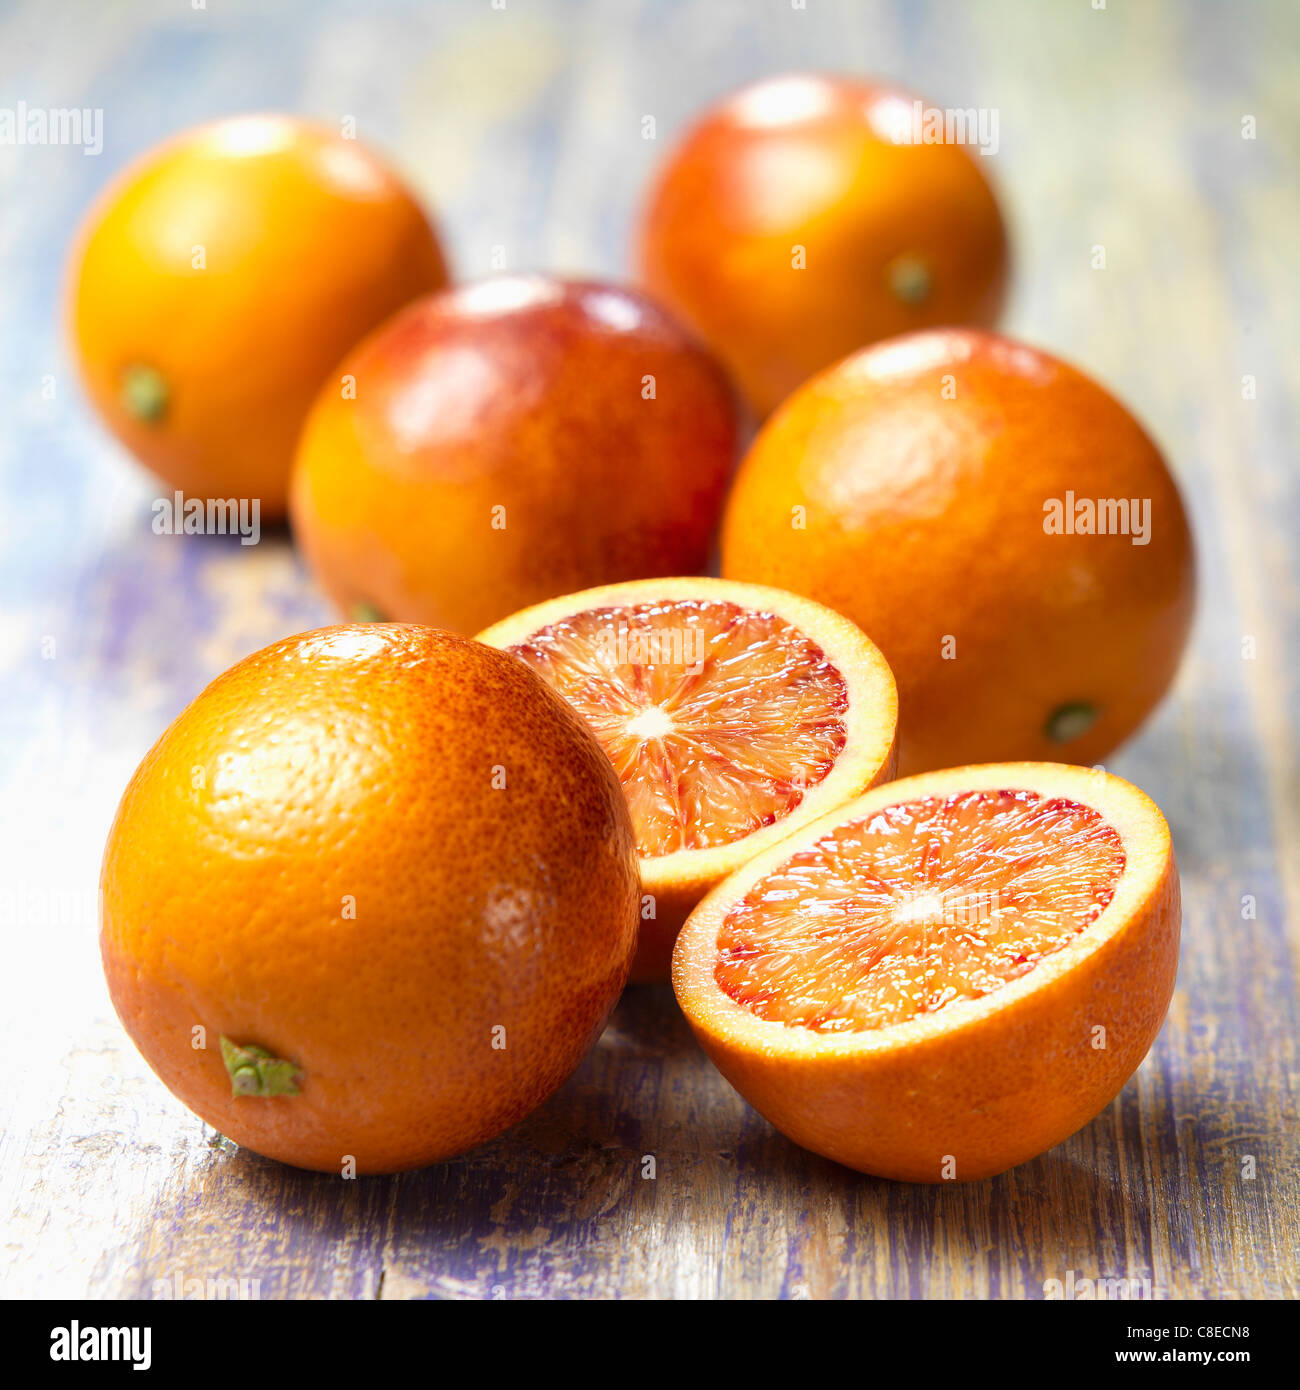 Blood oranges Stock Photo